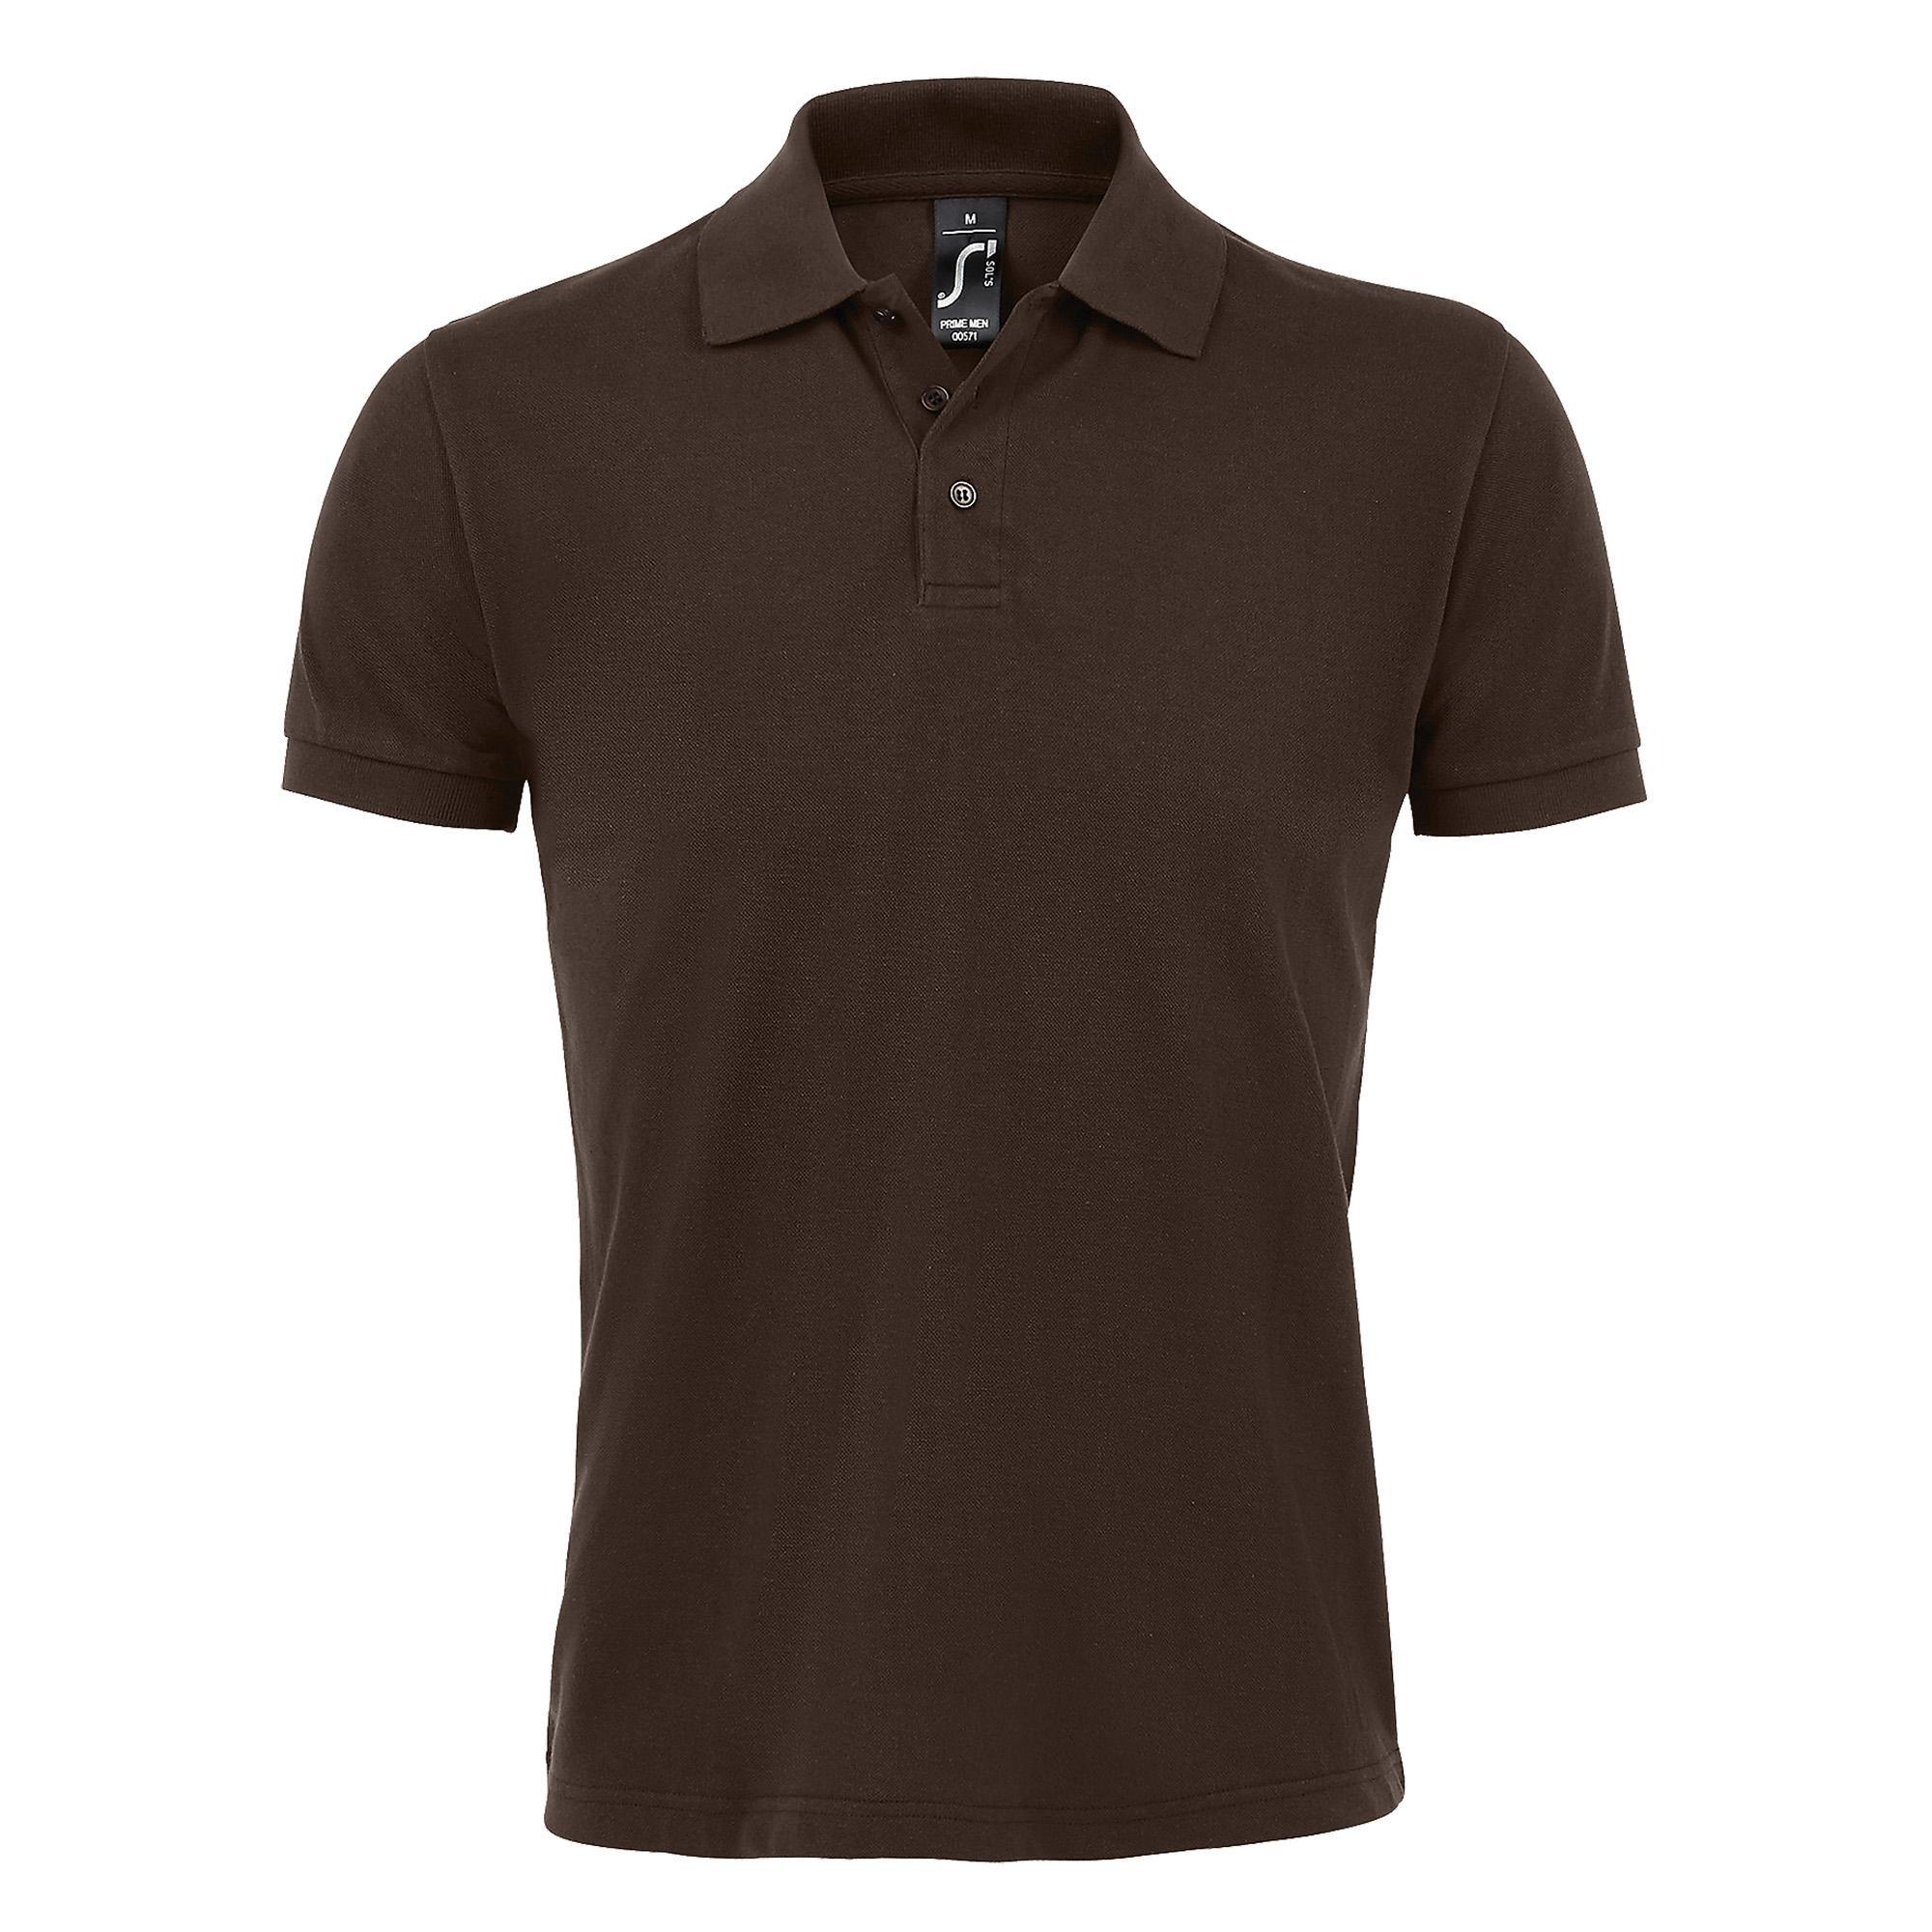 SOLs Mens Prime Pique Plain Short Sleeve Polo Shirt (Chocolate) (XXL)